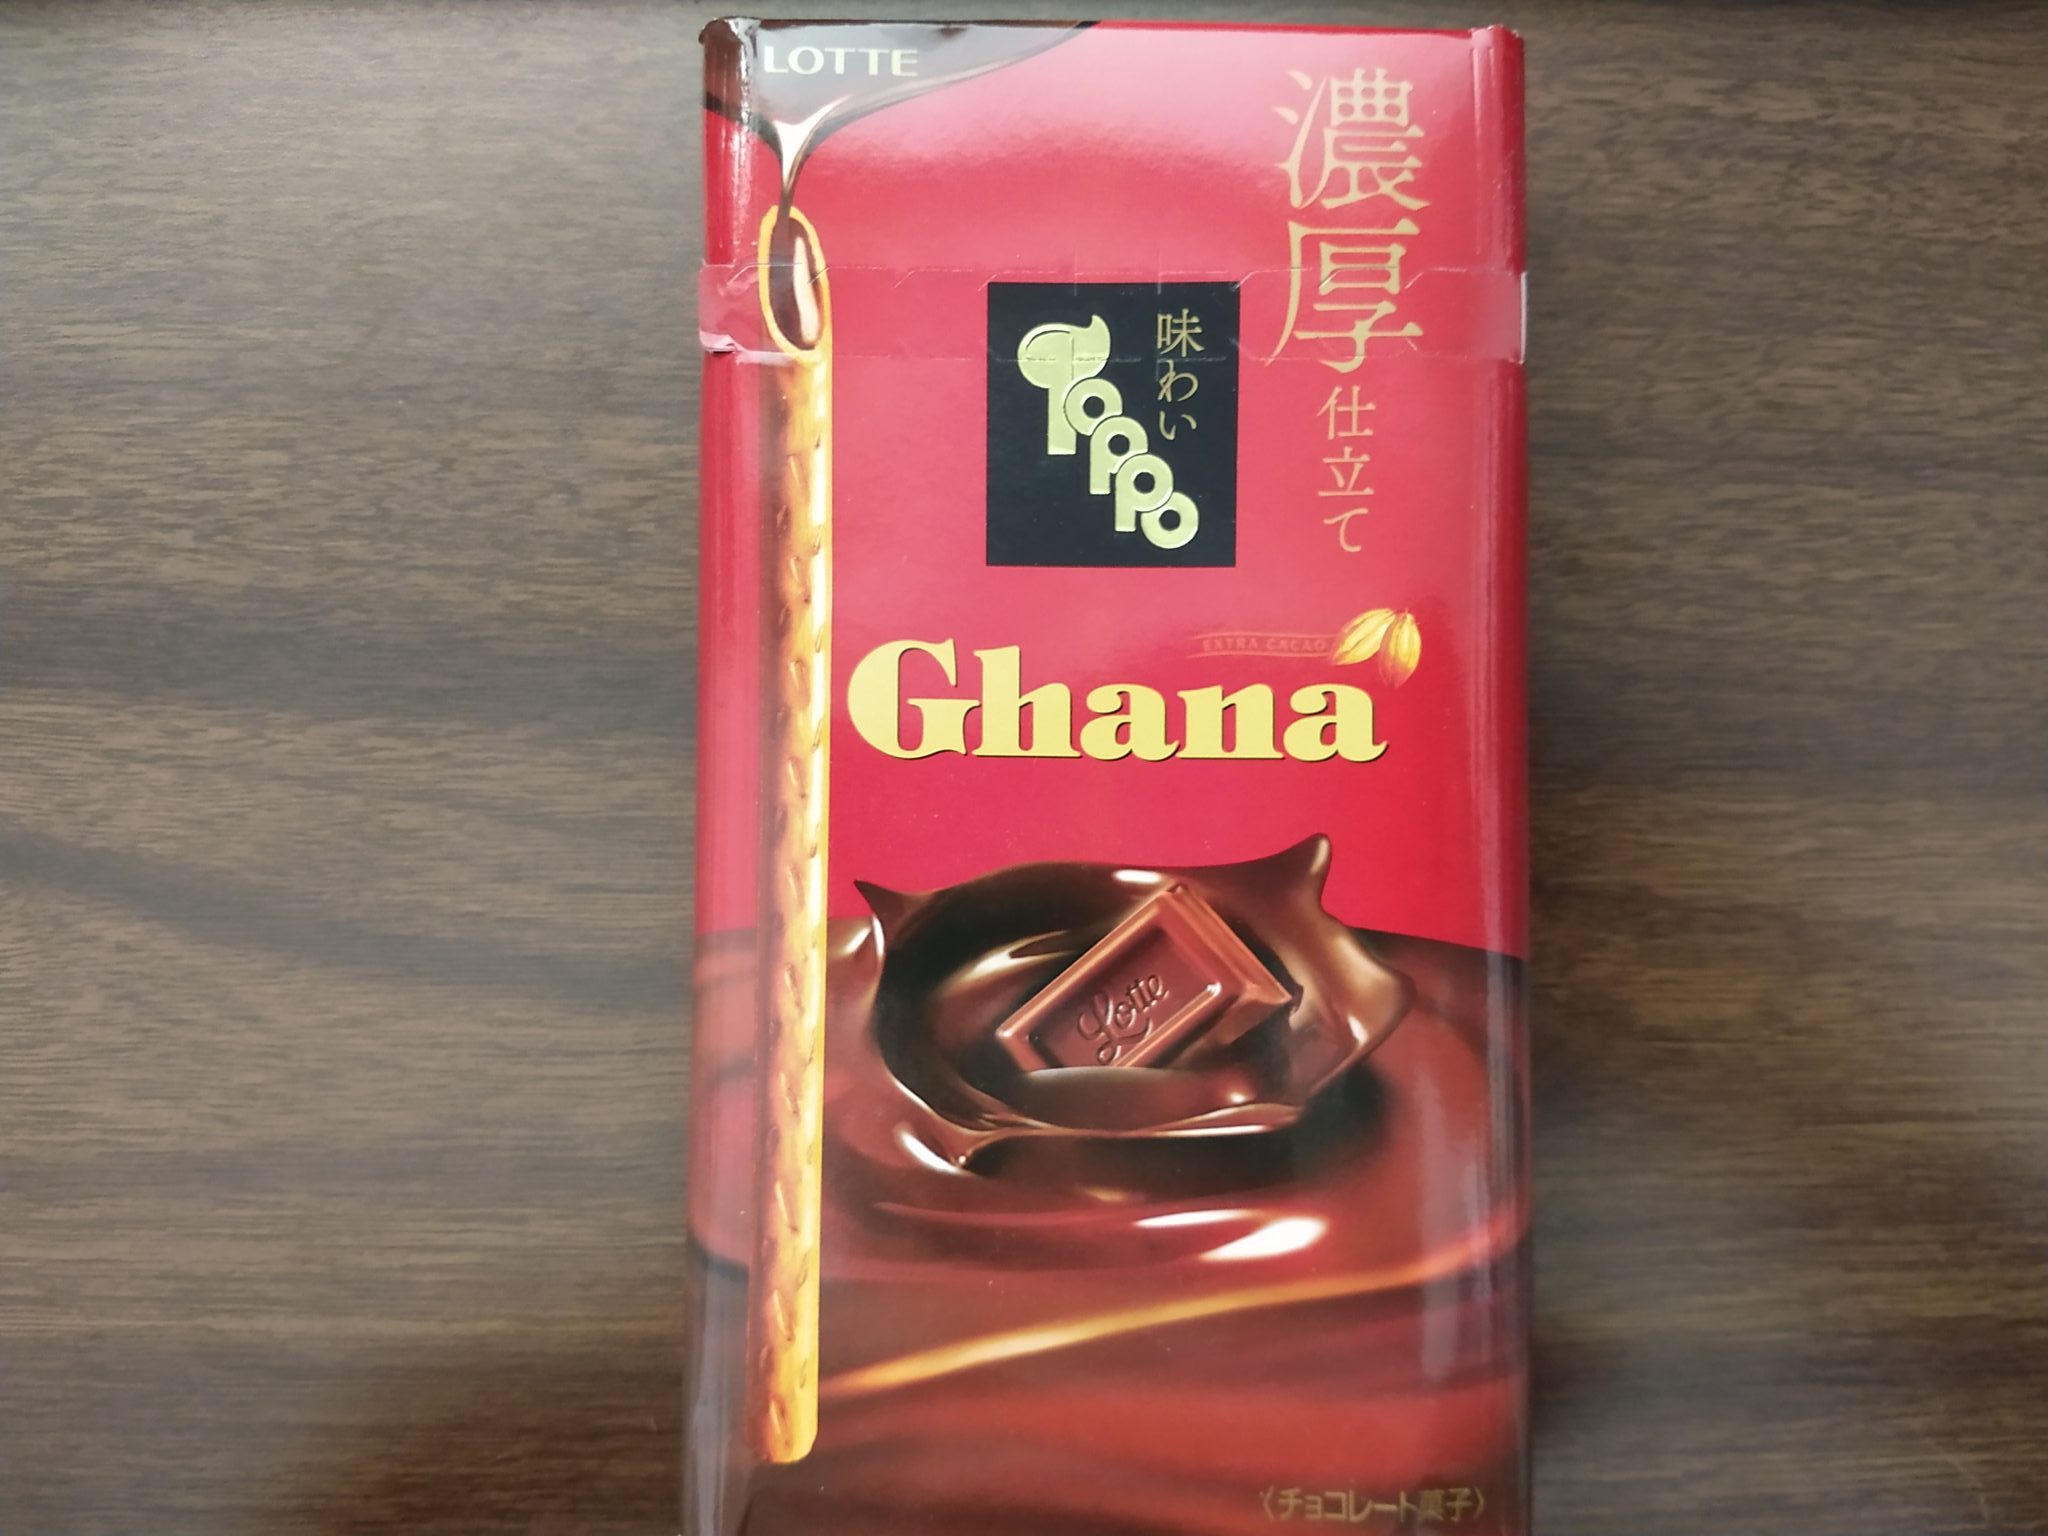 Toppo – Ghana Rich Chocolate